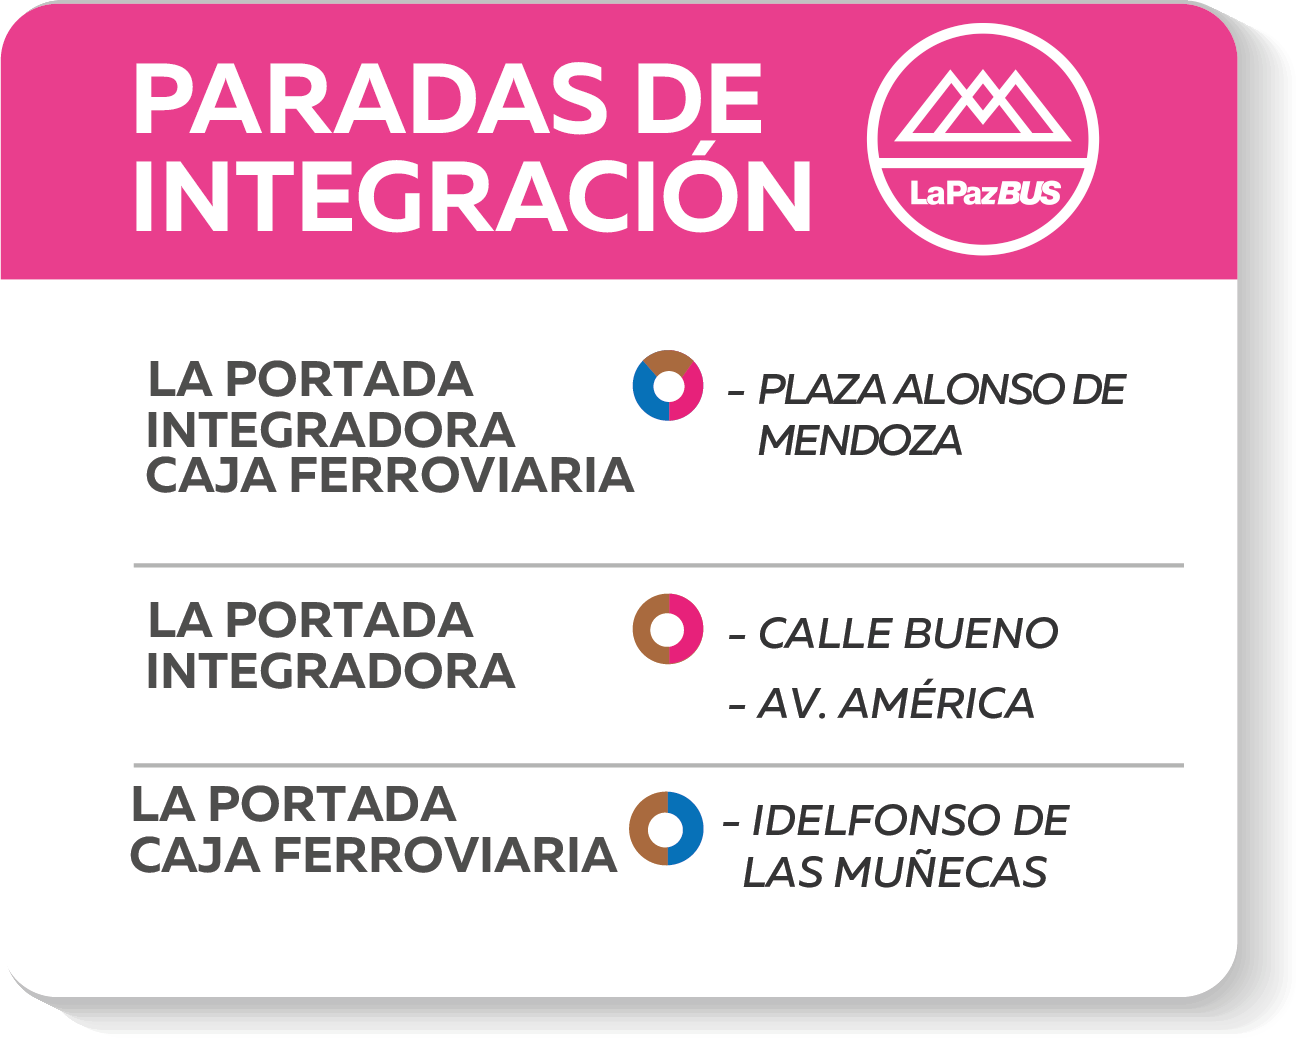 paradas integracion rutas La Portada_Integradora_CajaFerroviaria